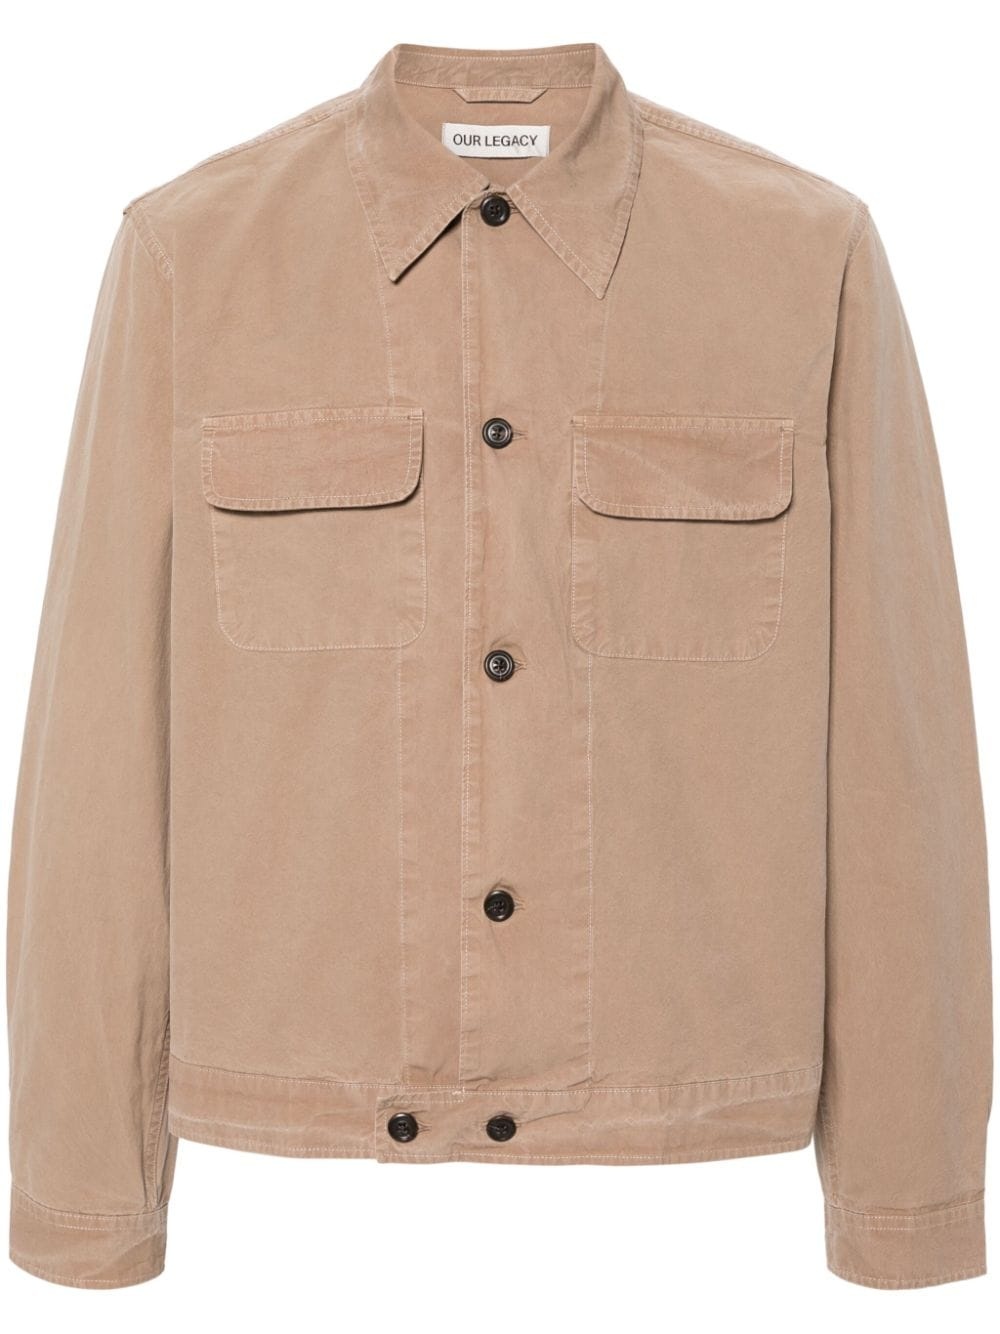 Coach cotton shirt jacket - 1